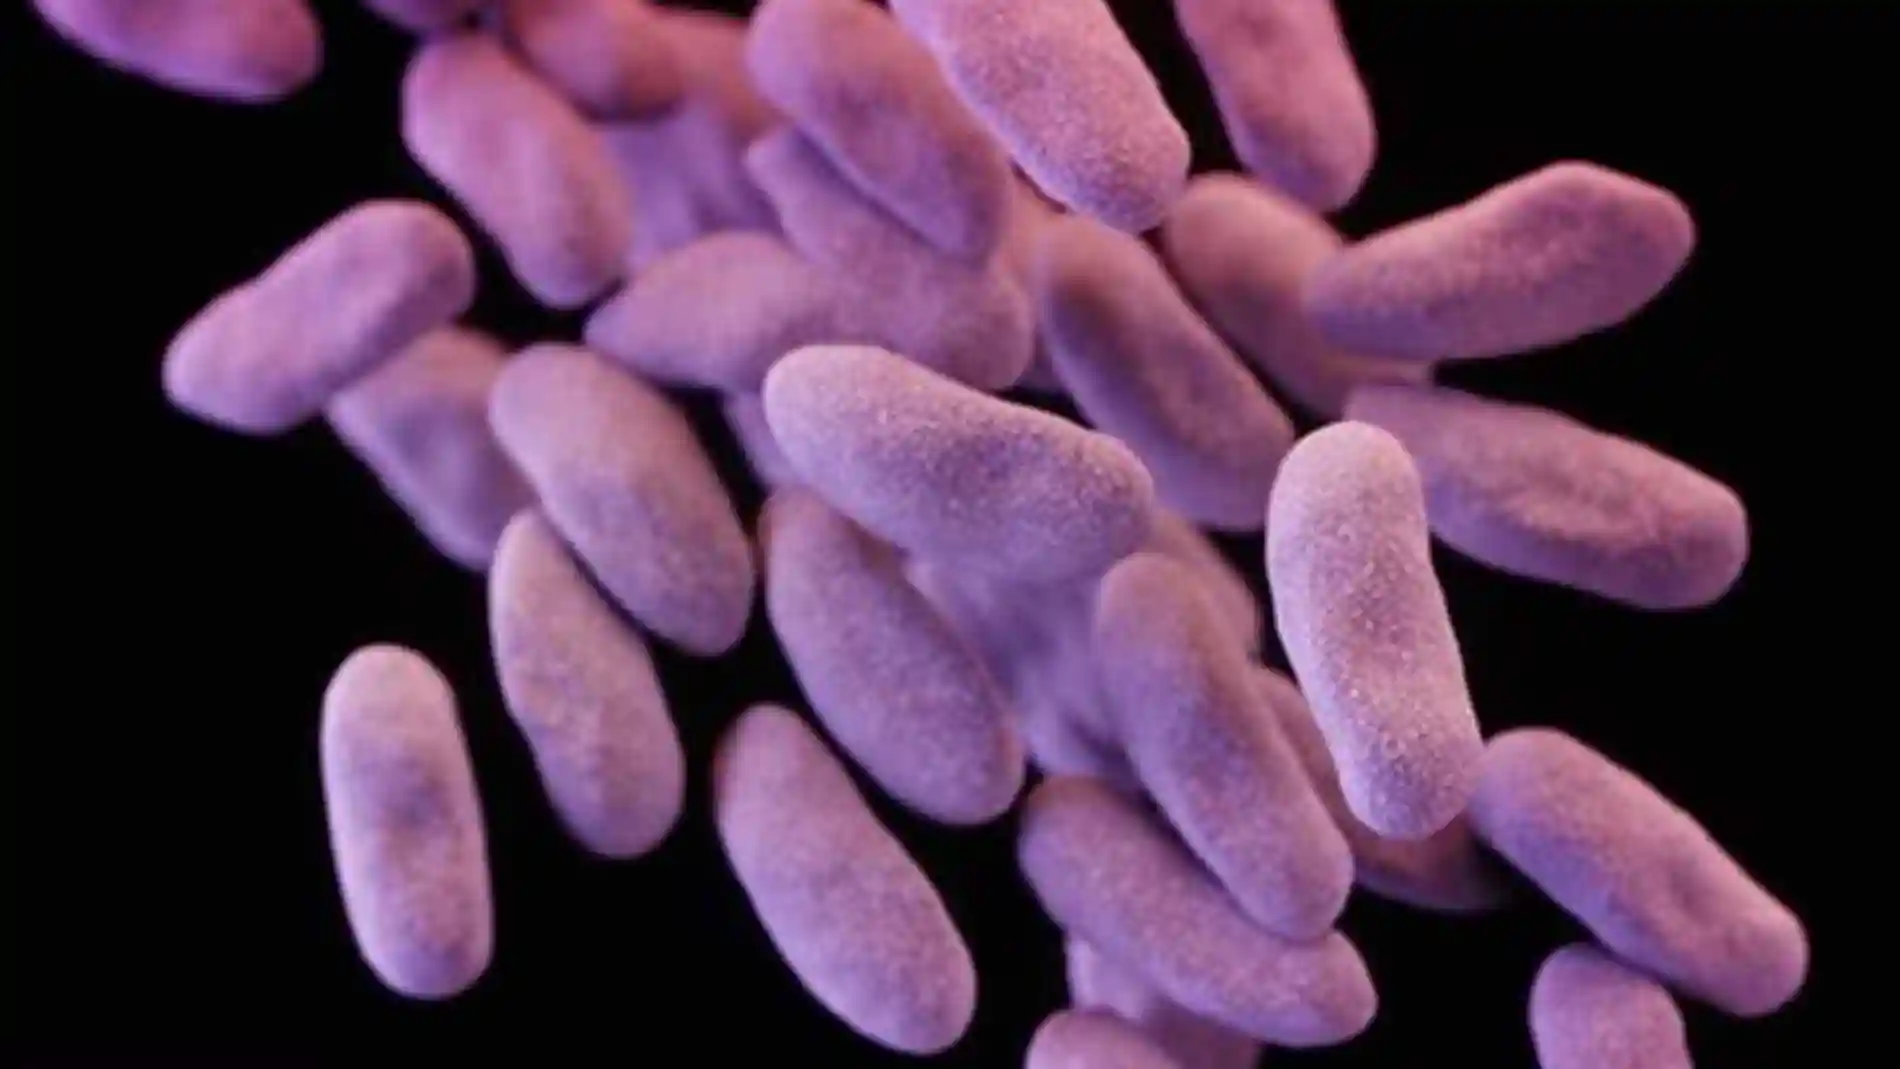 : Bacteria Neisseria gonorrhoeae causante de la gonorrea